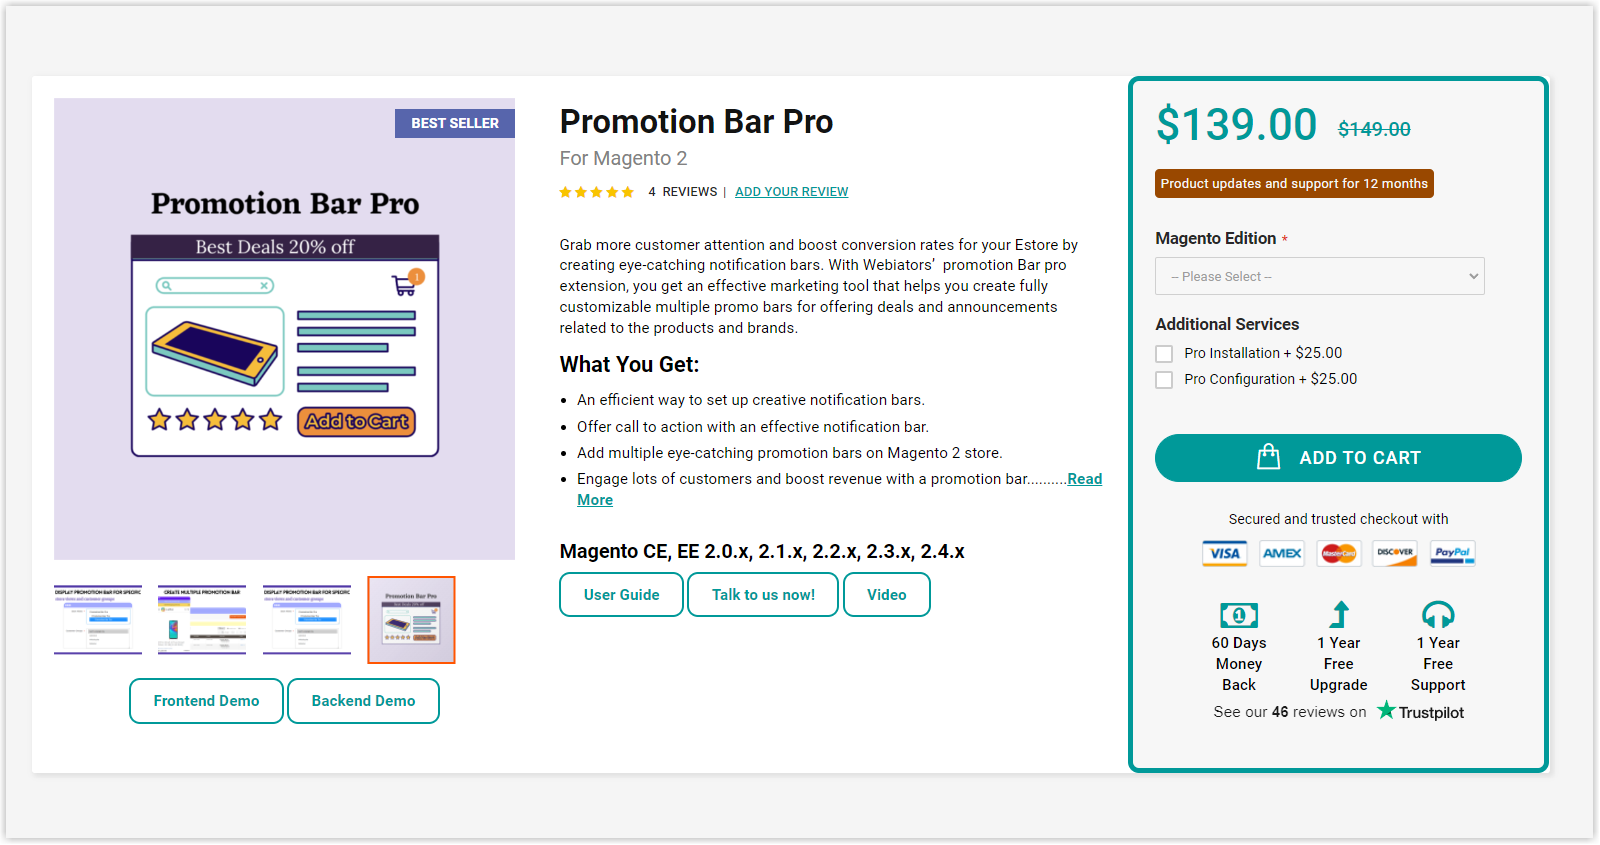  Promotion Bar Pro by Webiators